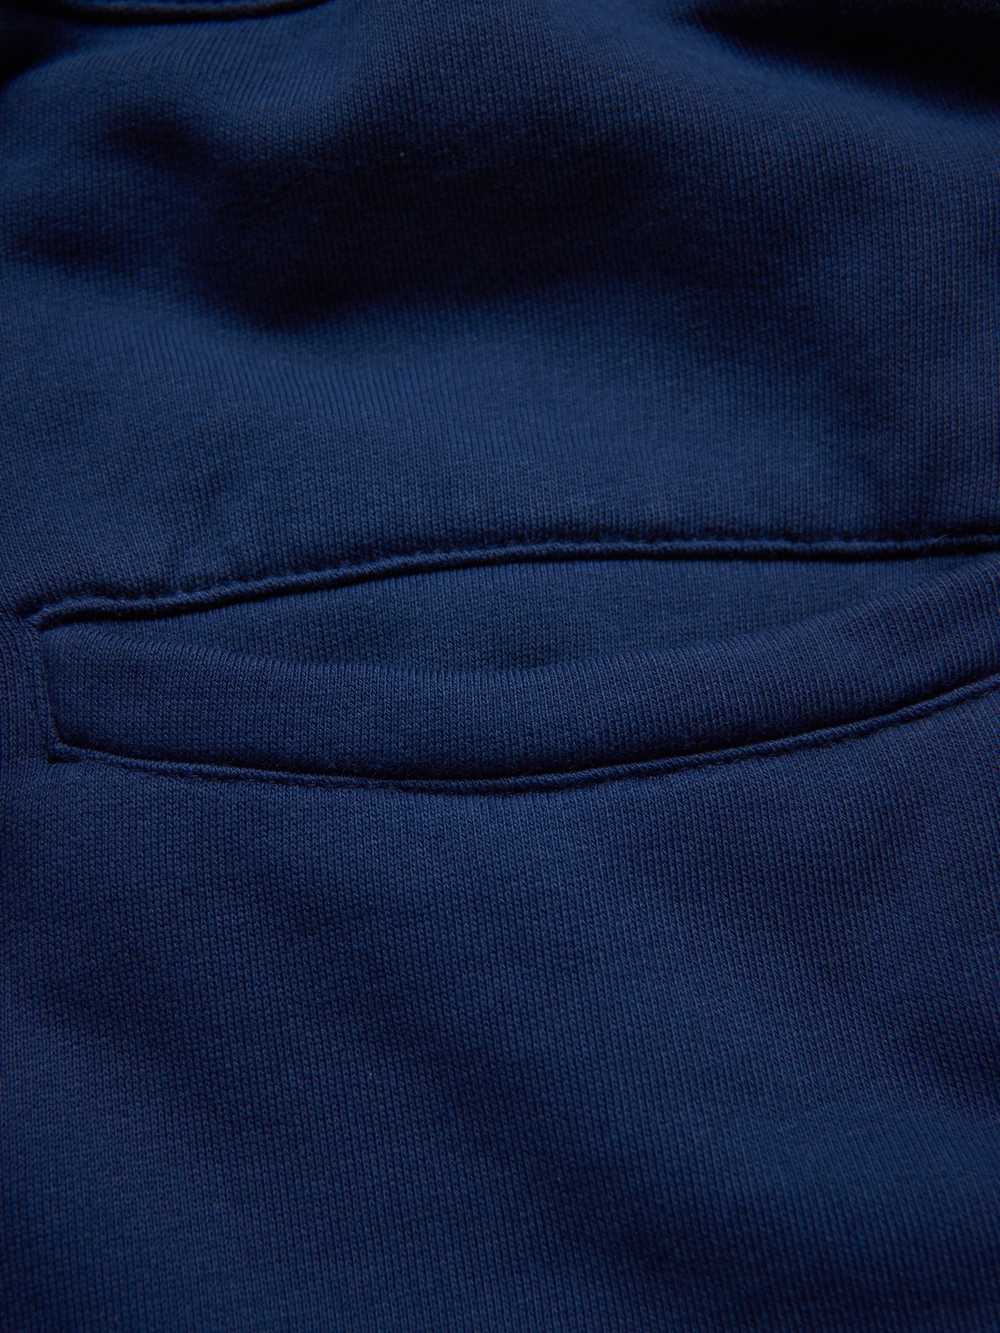 Haider Ackermann Blue Perth Cotton Joggers - image 3